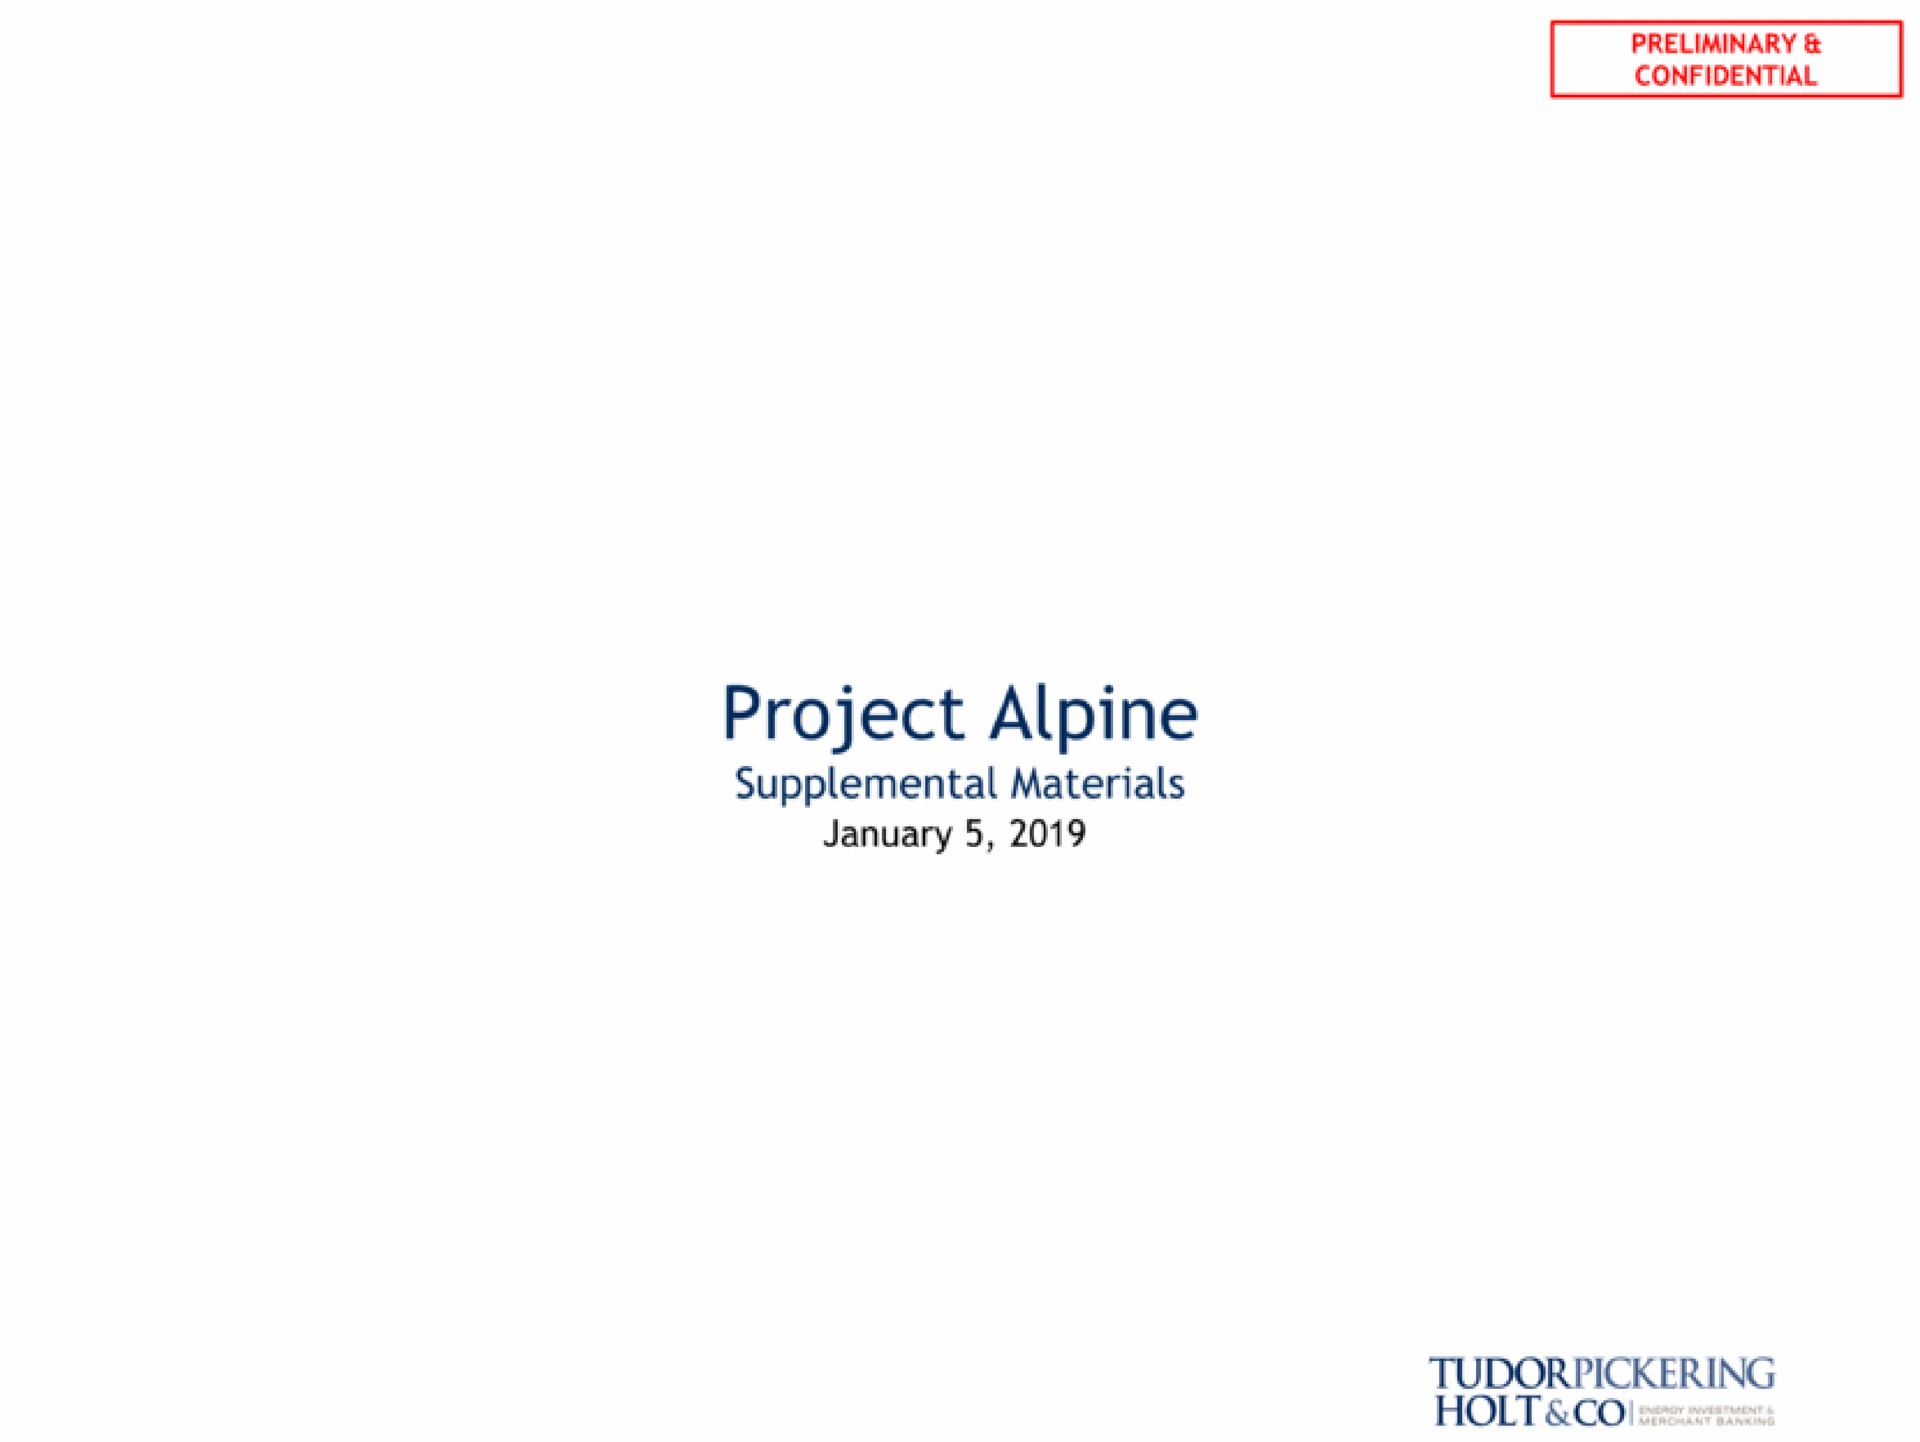 project alpine supplemental materials holt | Tudor, Pickering, Holt & Co